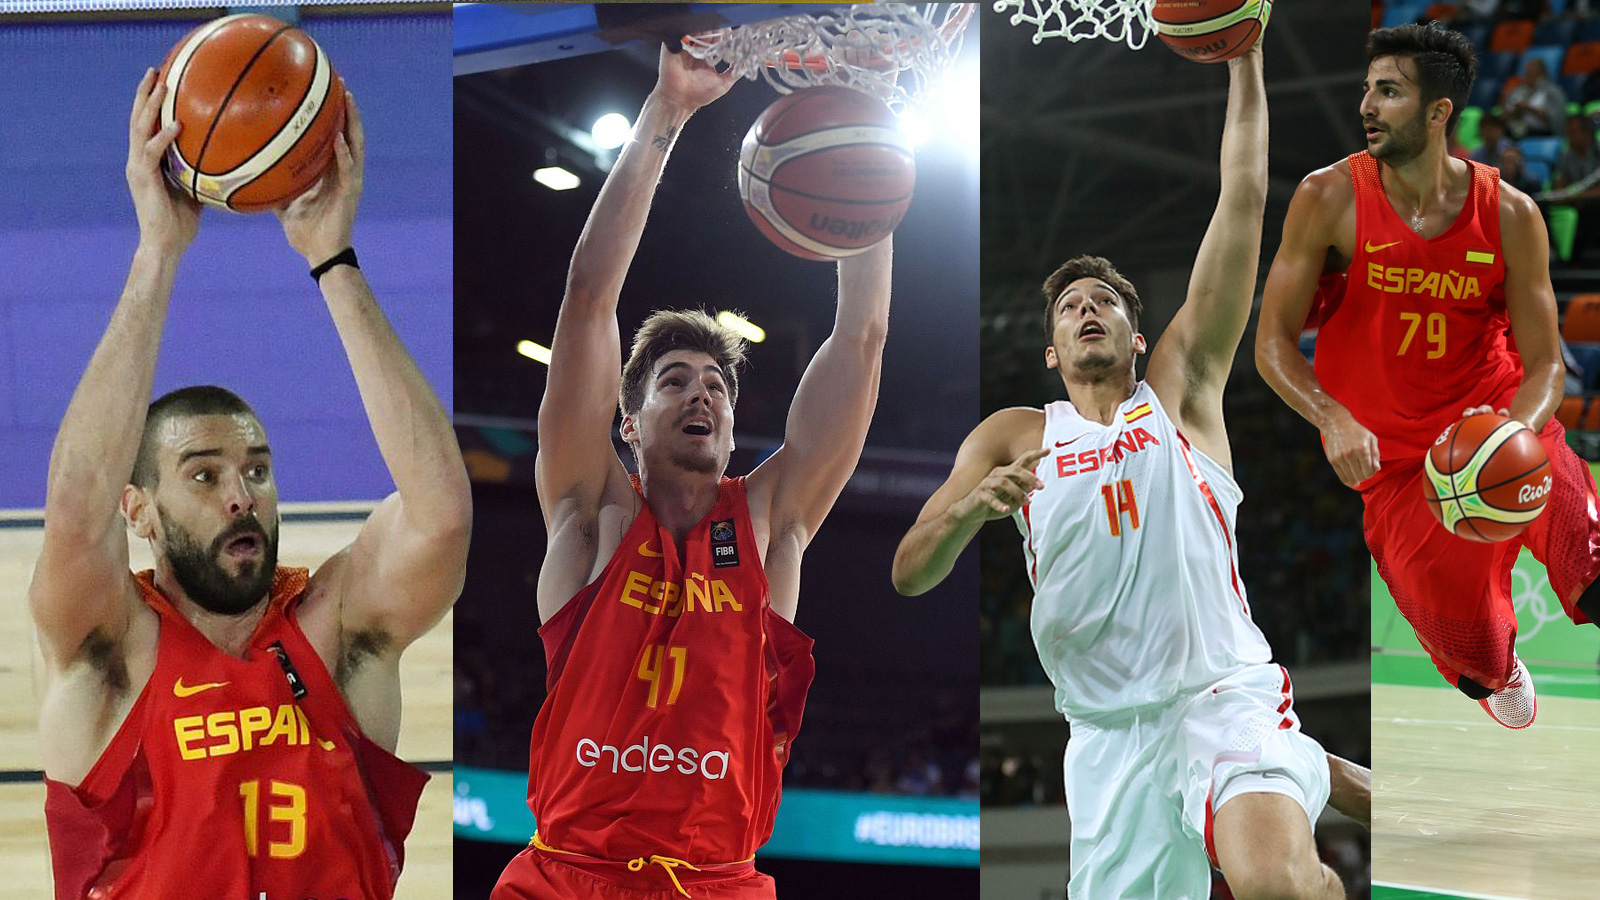 Lithuania release 24-man list for national basketball team - CGTN